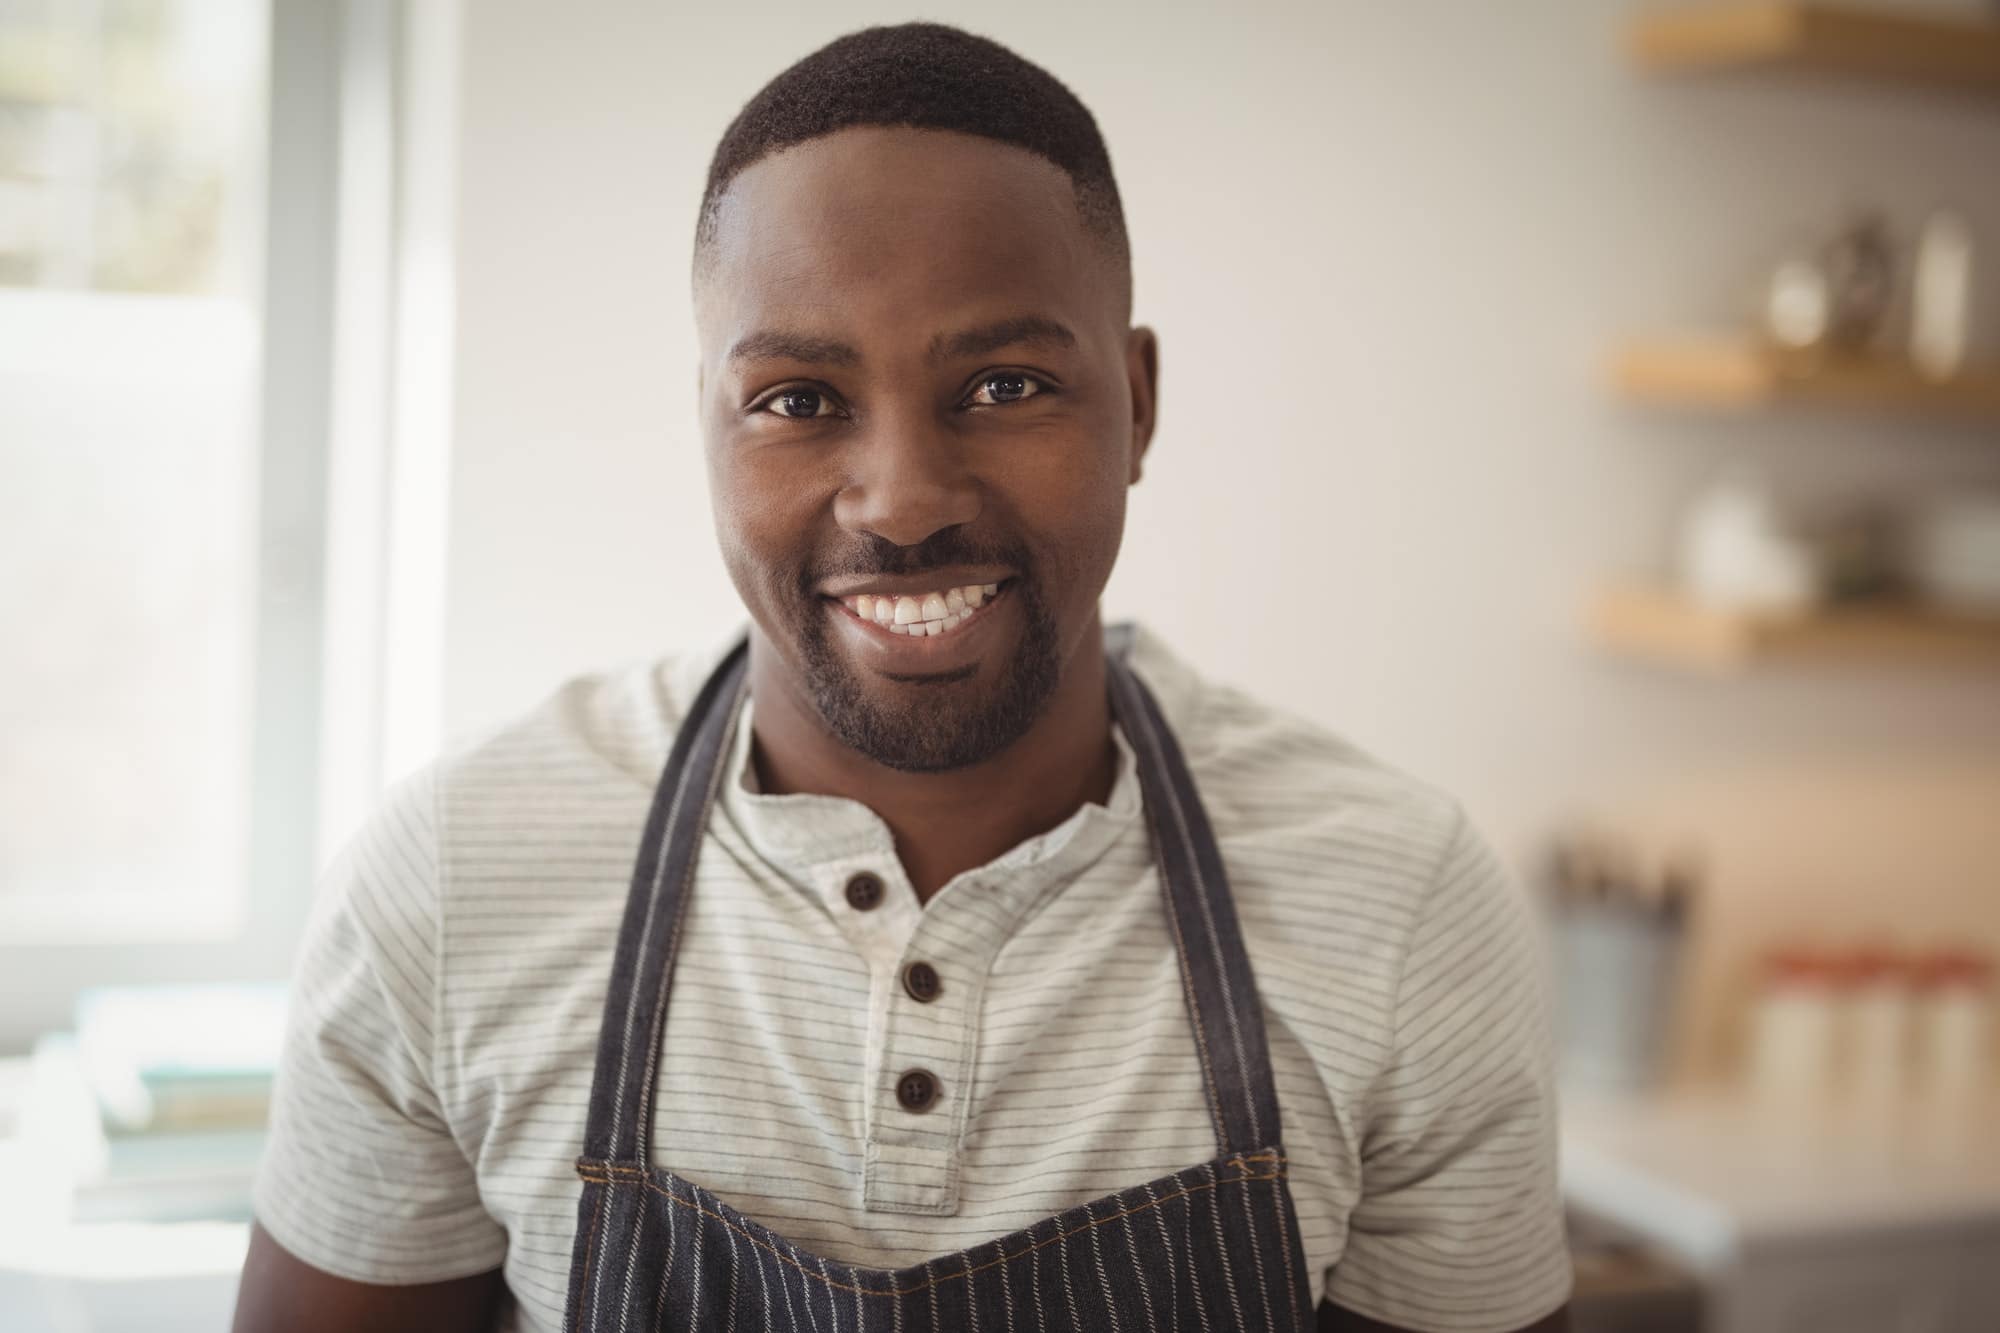 Smiling man standing in kitchen